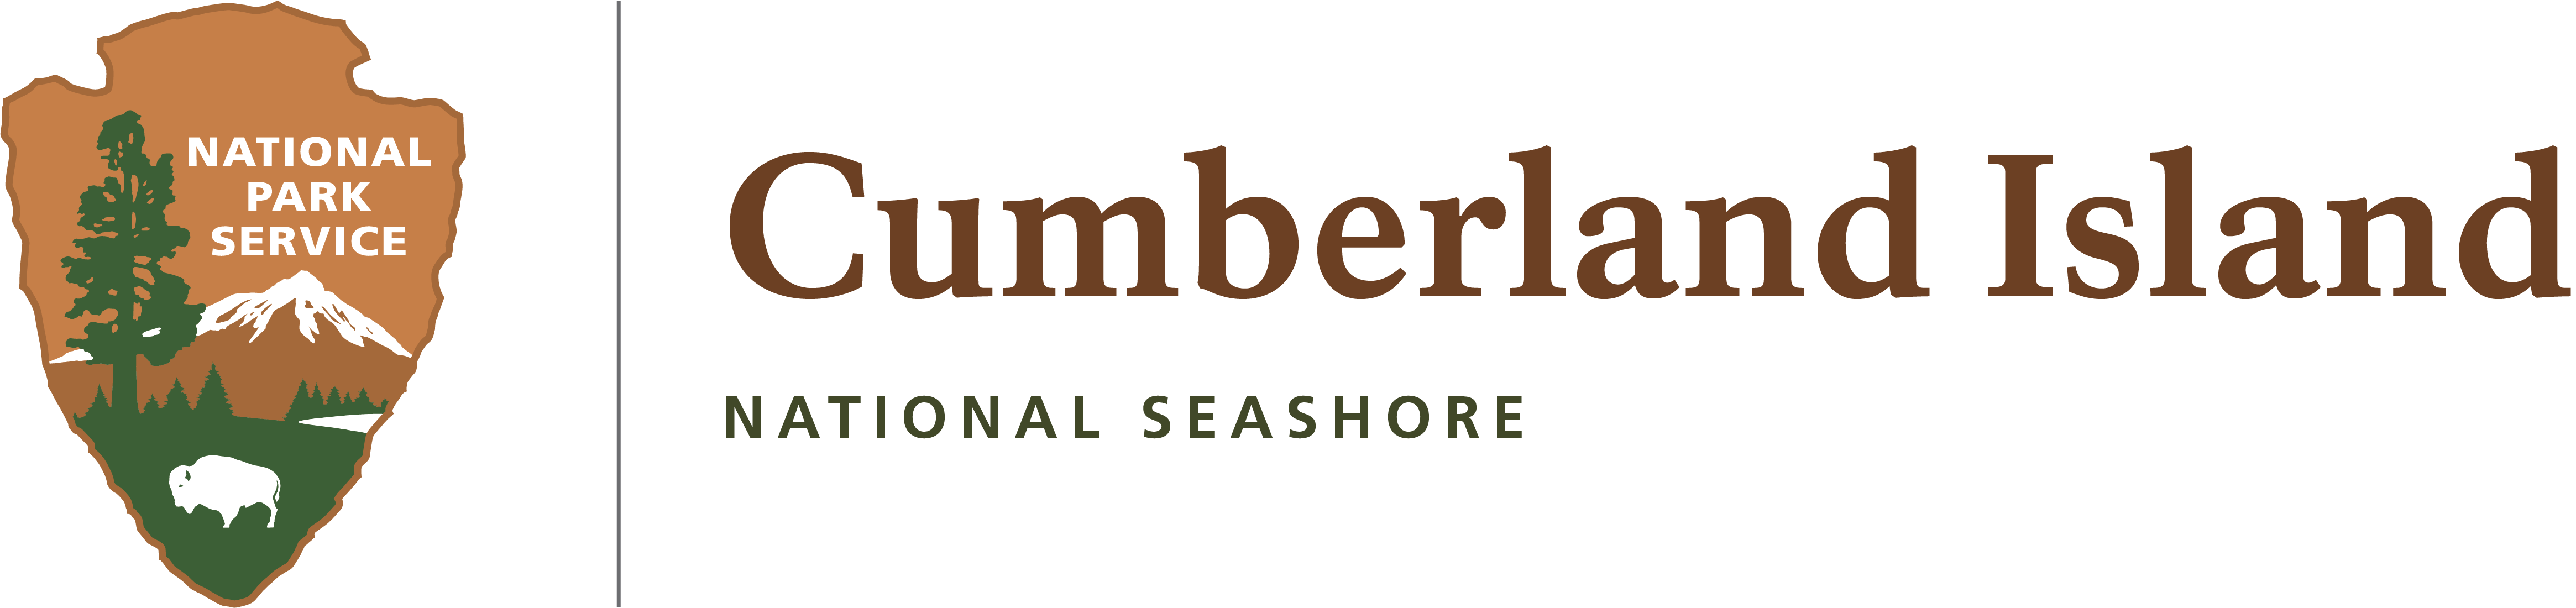 Cumberland Island National Seashore